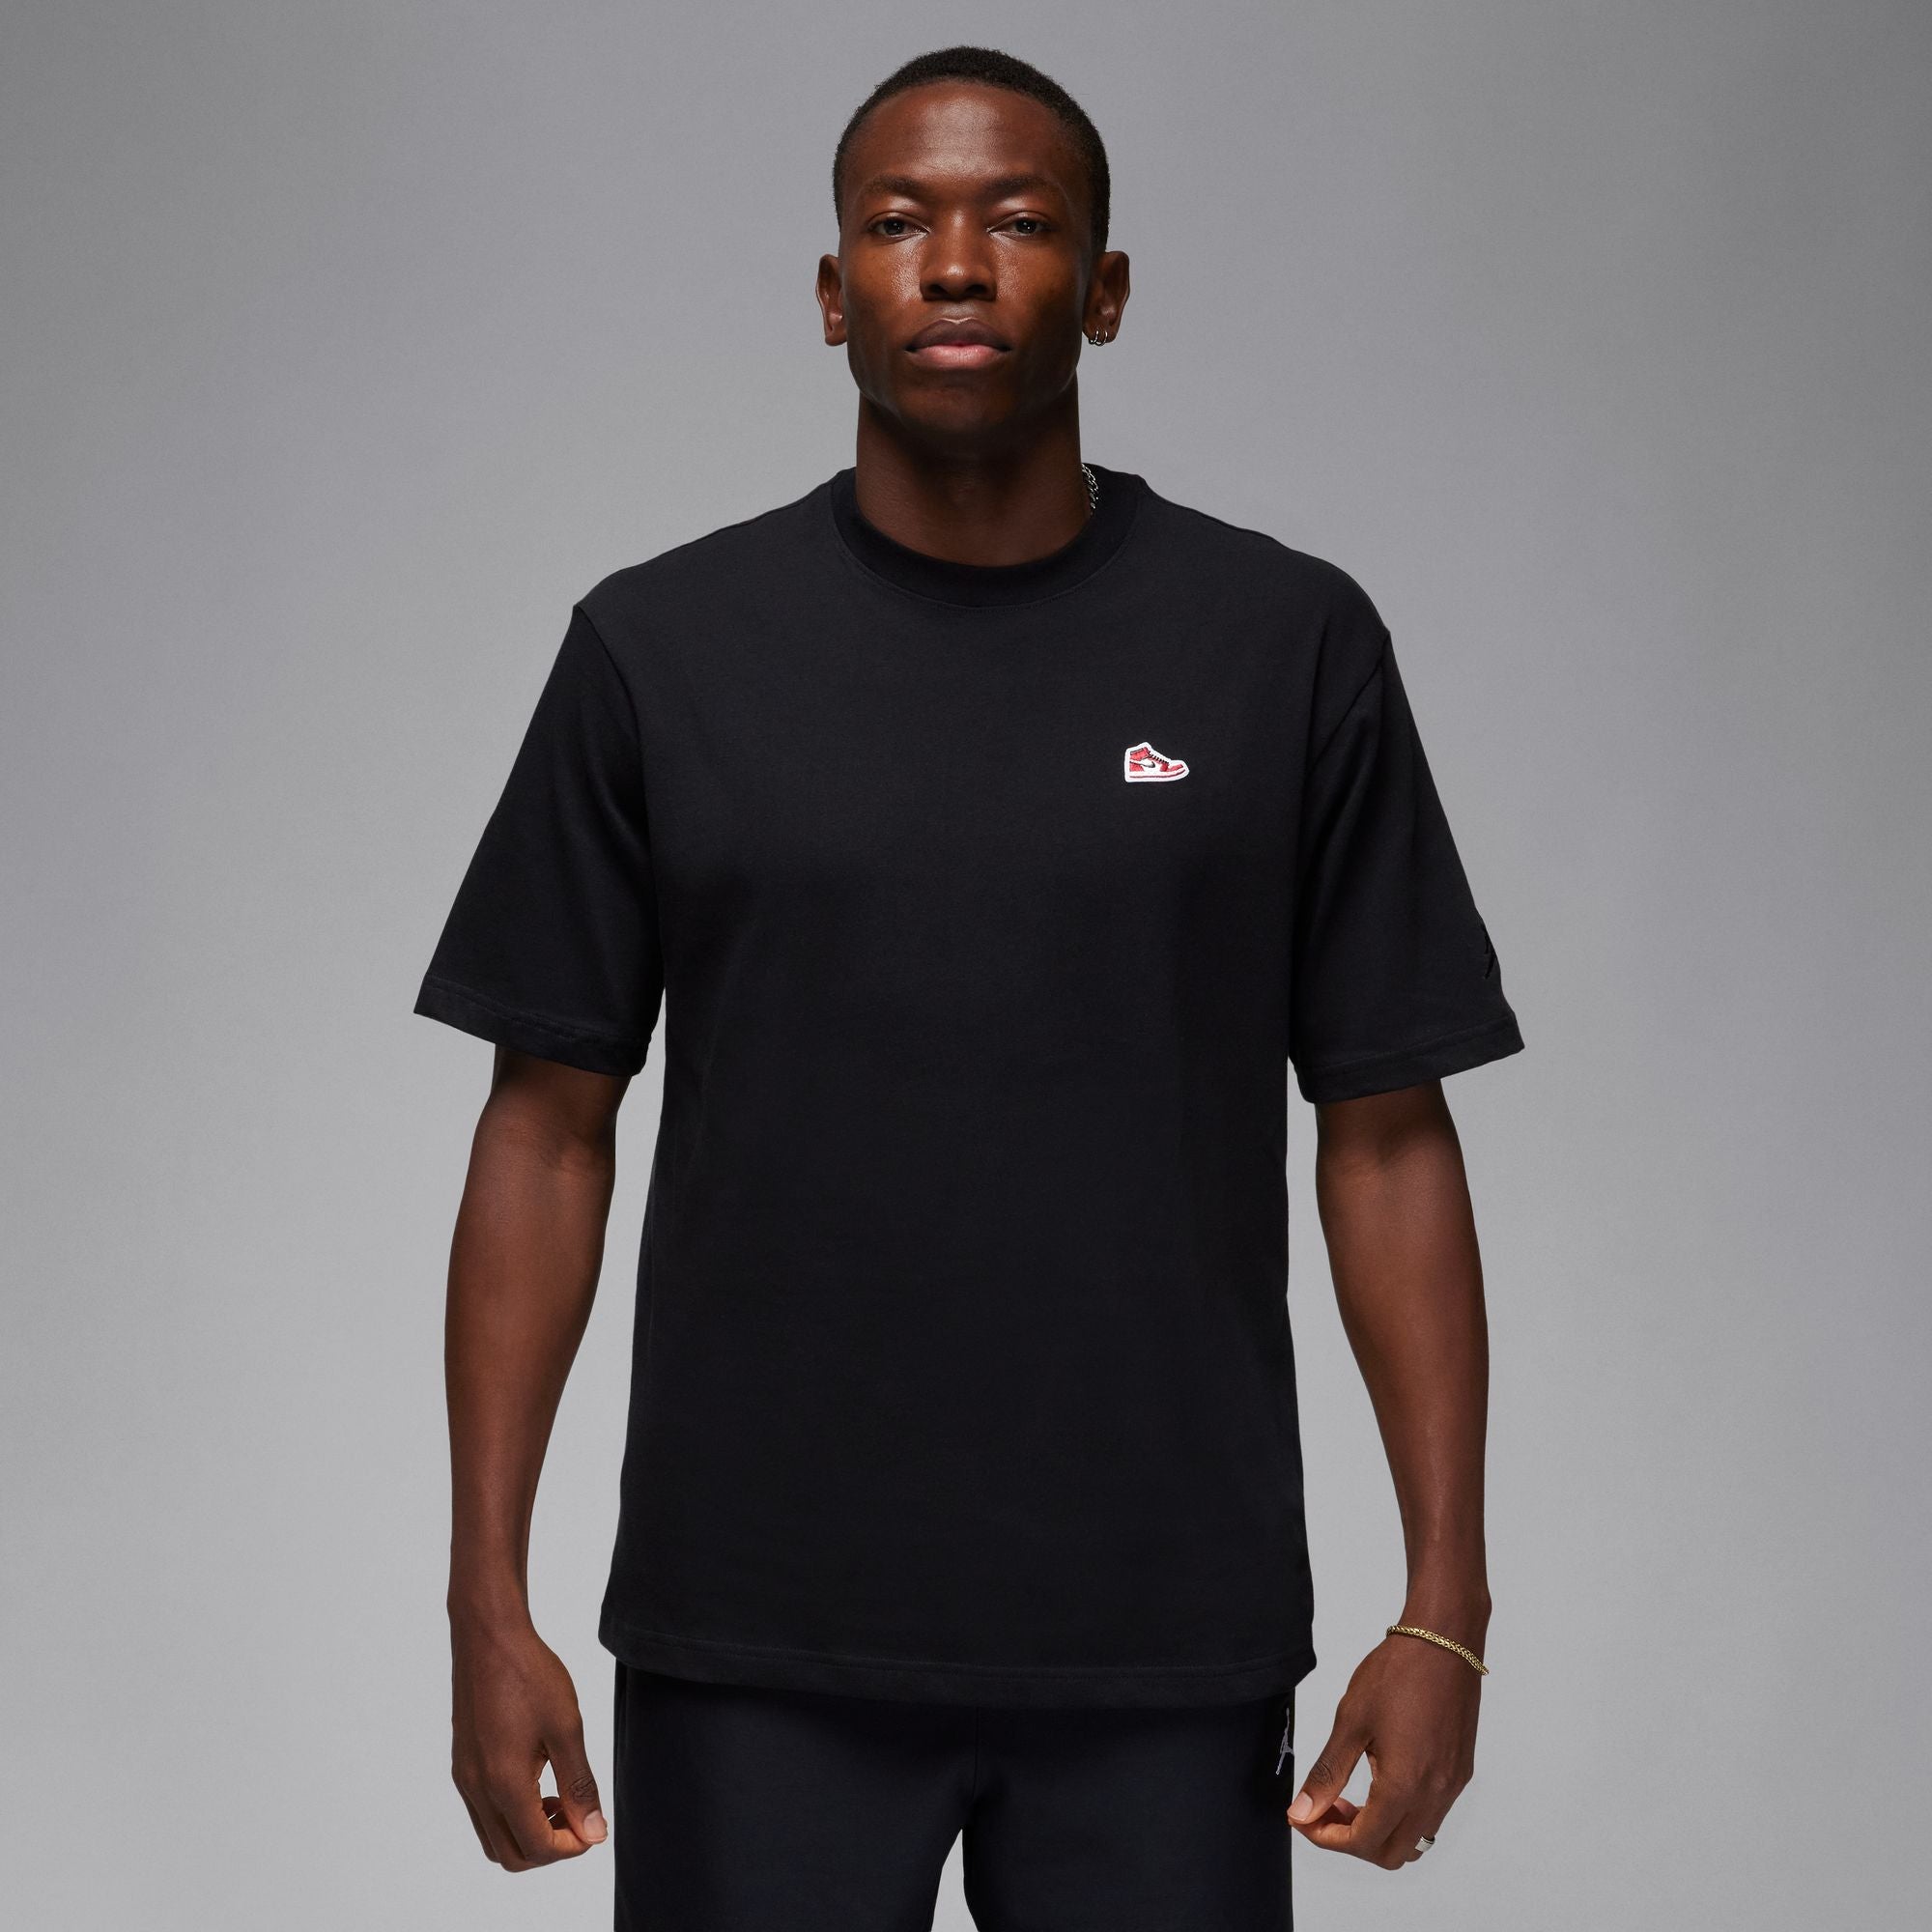 Jordan Brand Men's 'Sneaker Patch' T-Shirt